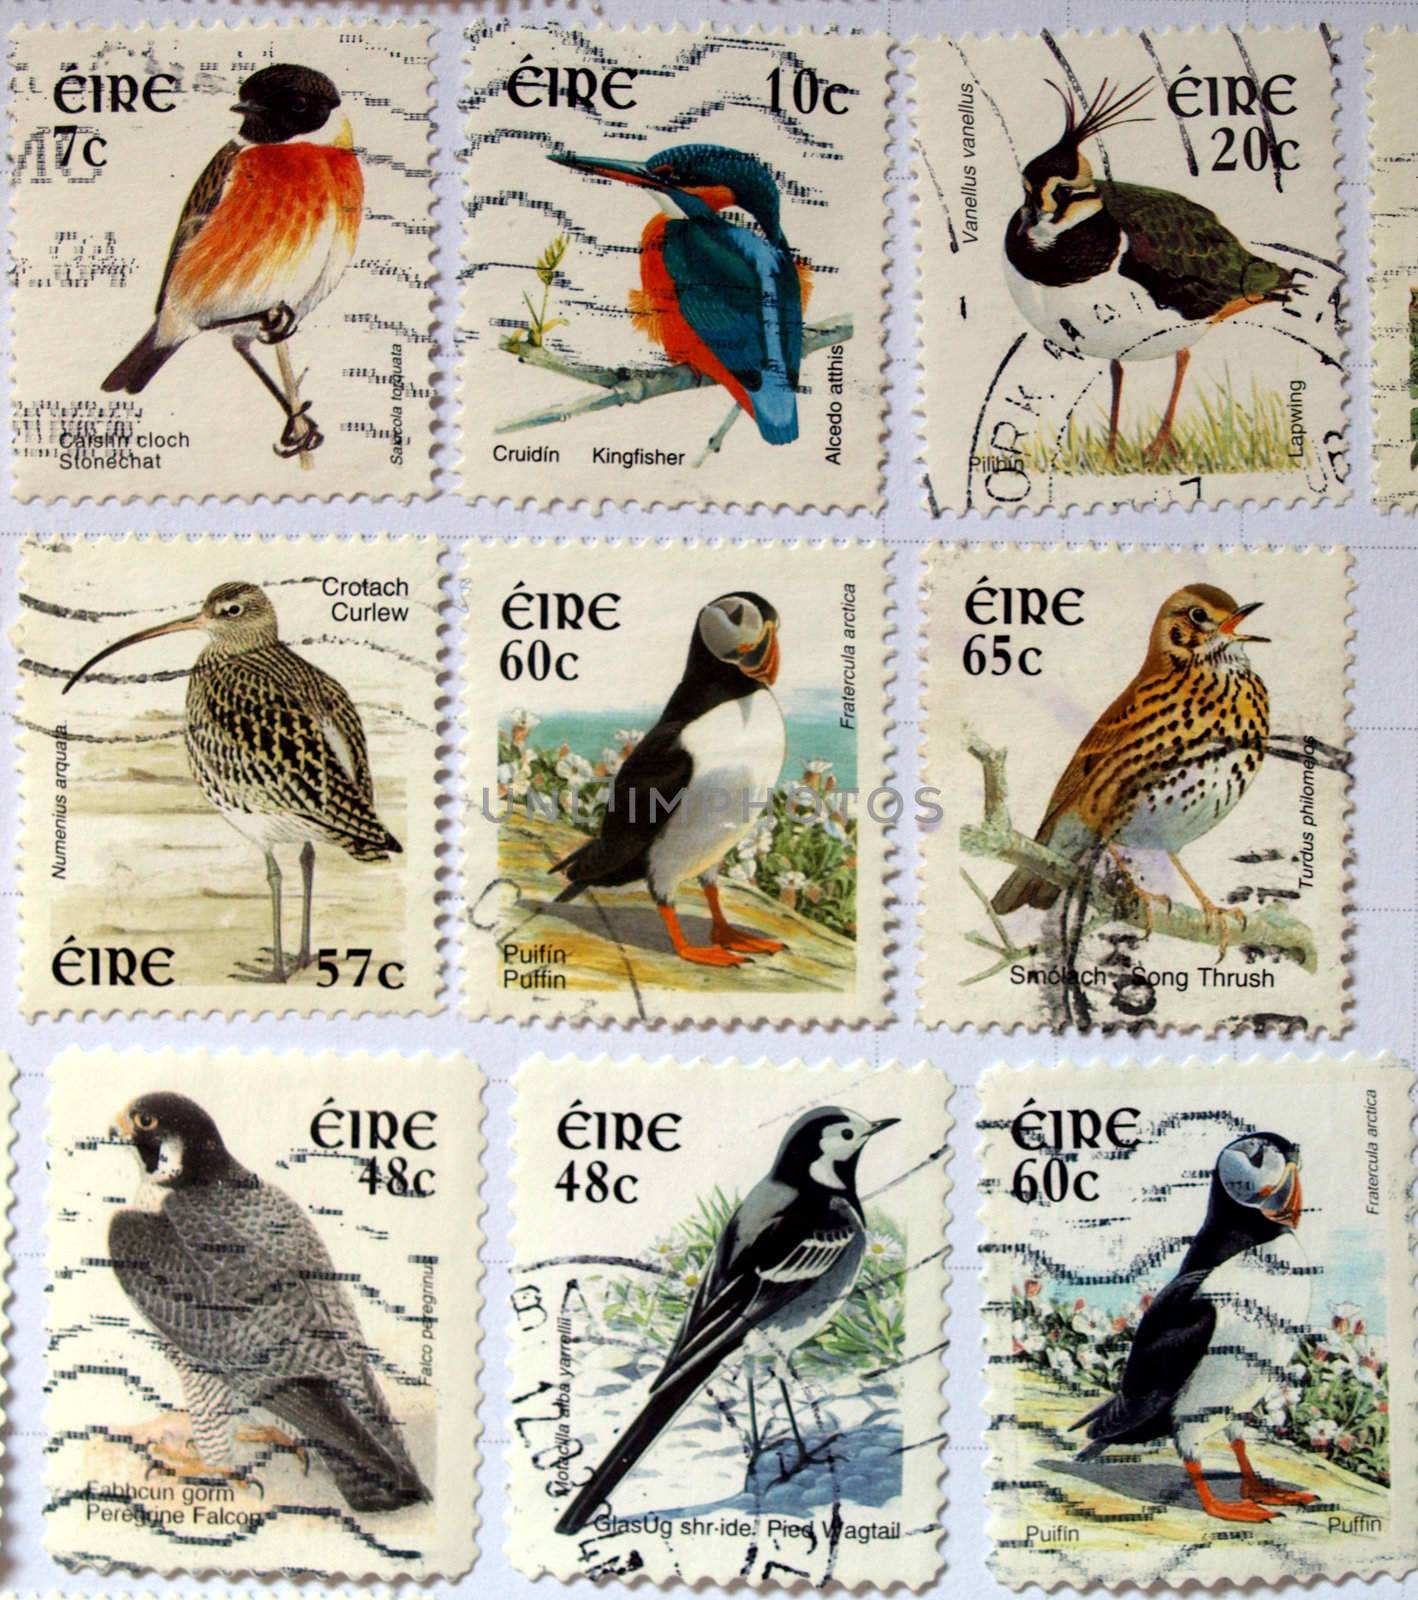 Range of Irish postage stamps with birds